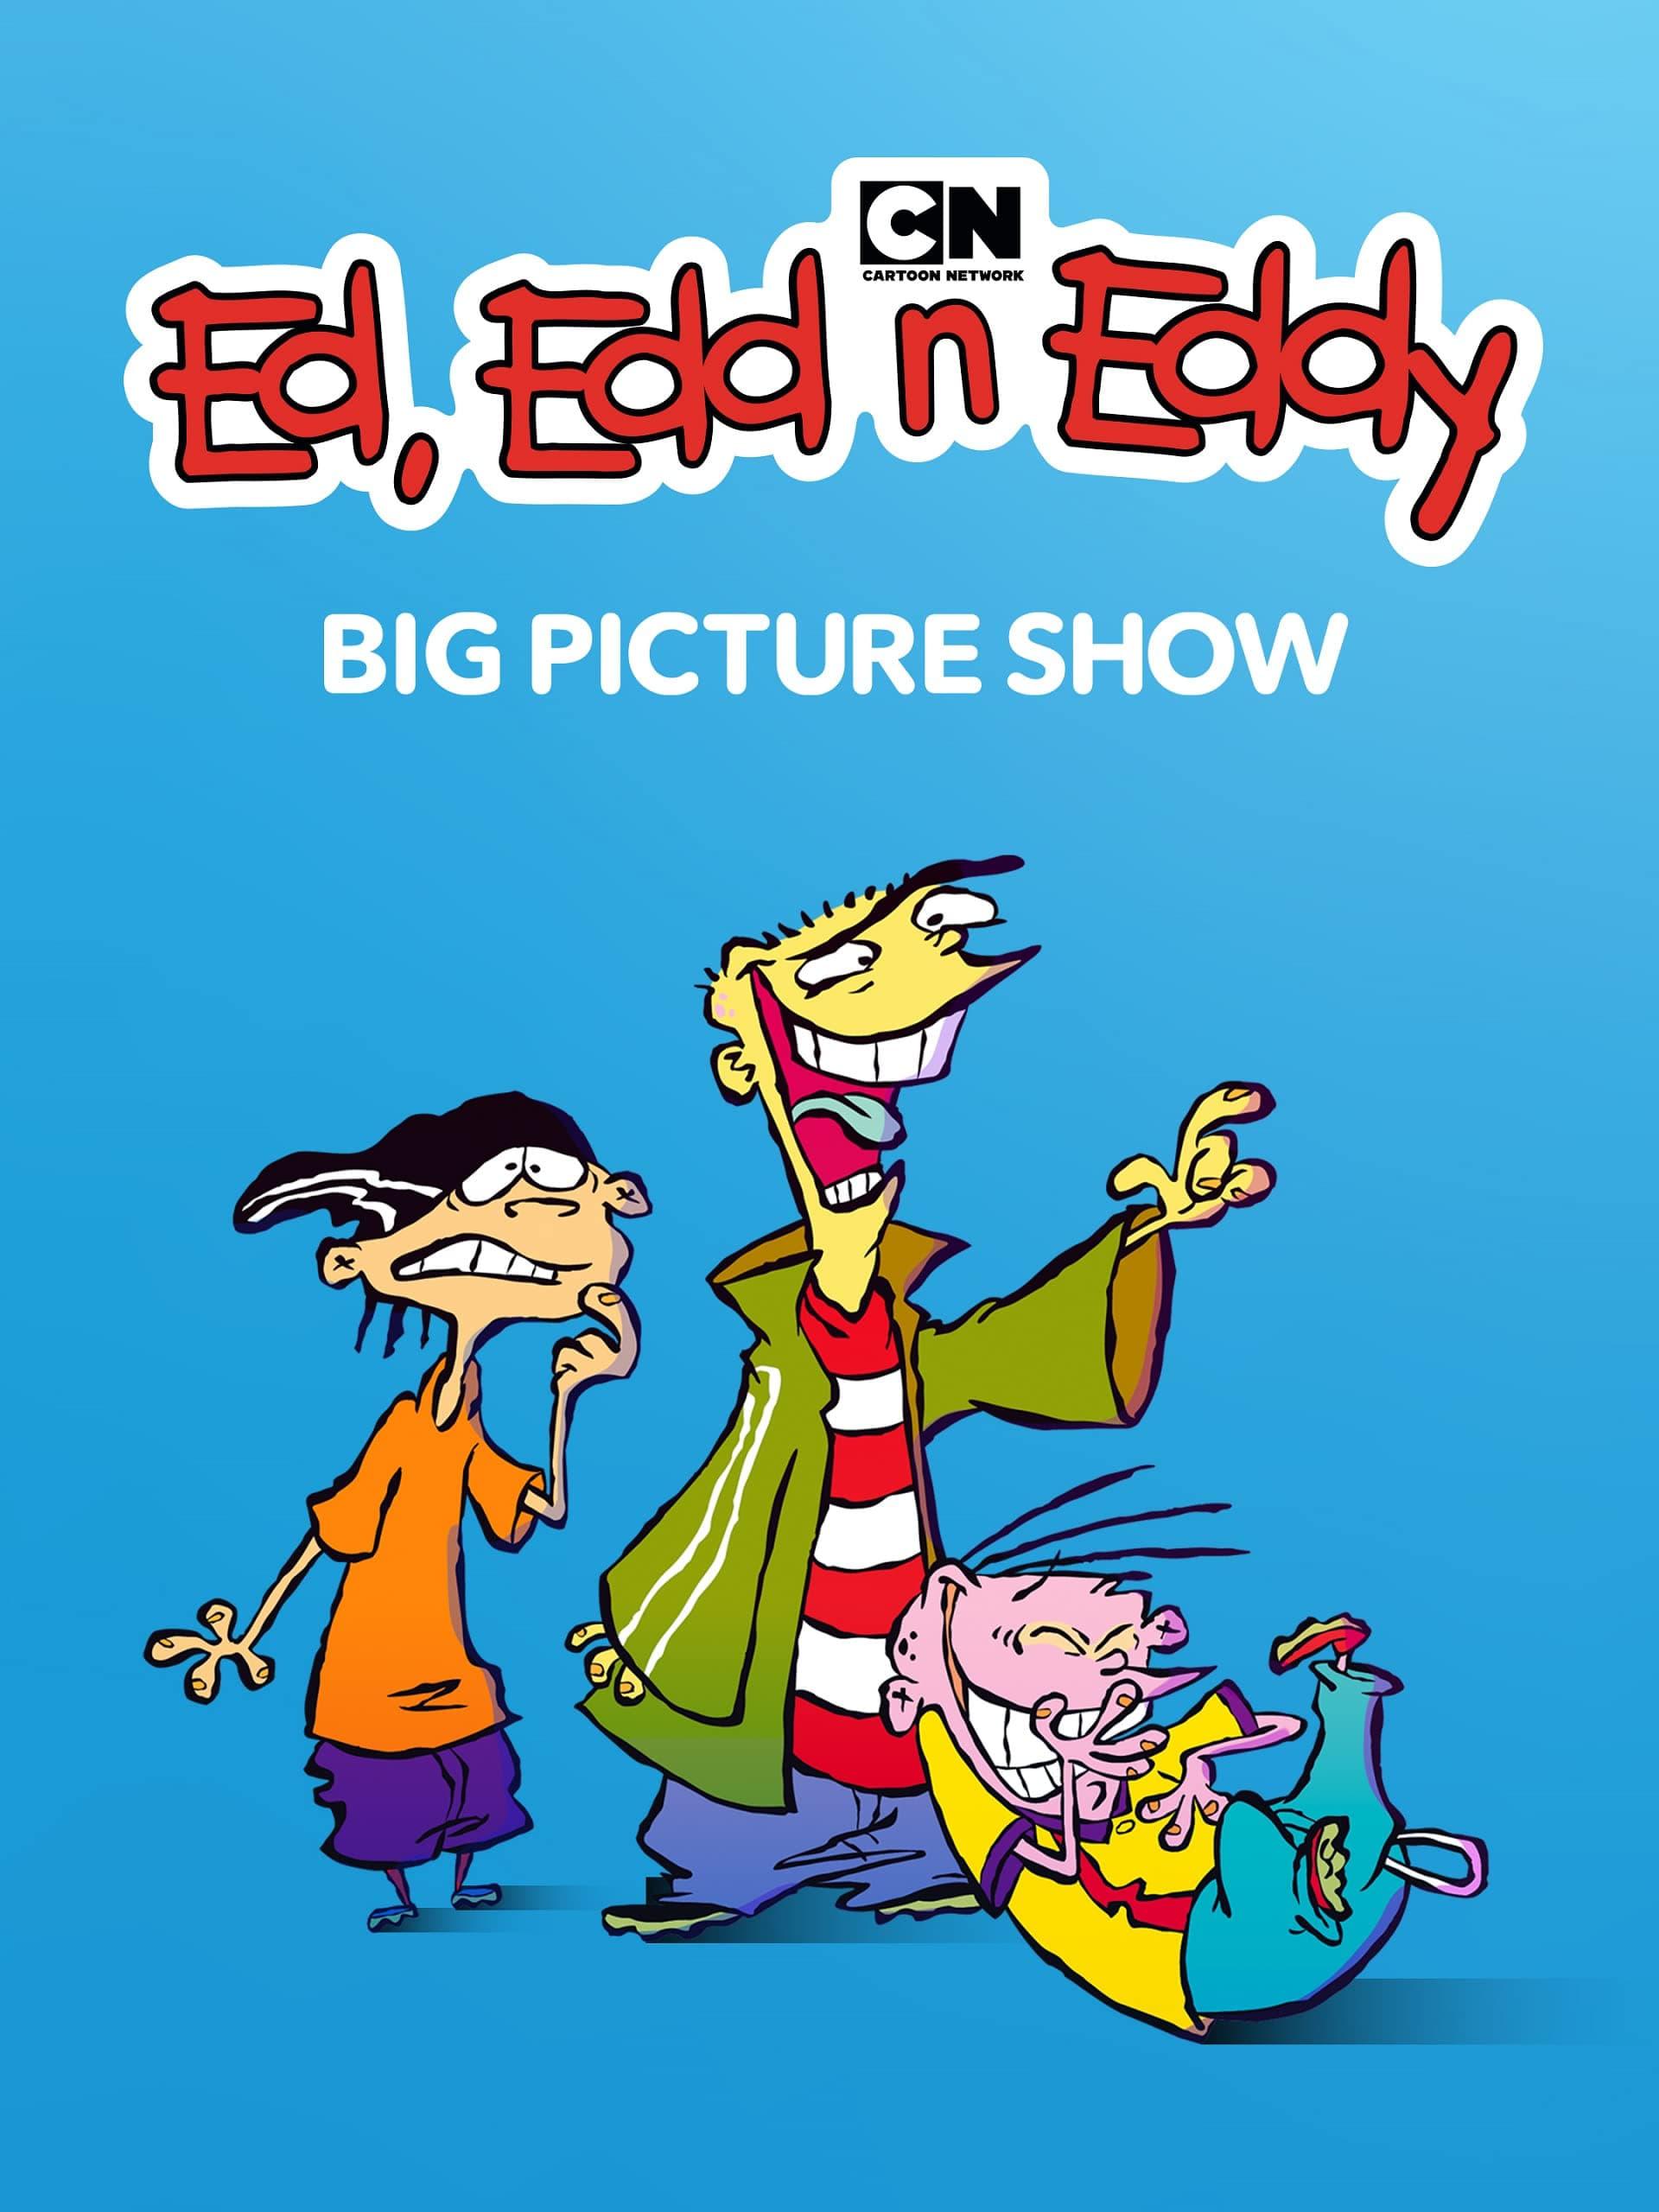 Ed, Edd n Eddy's Big Picture Show poster